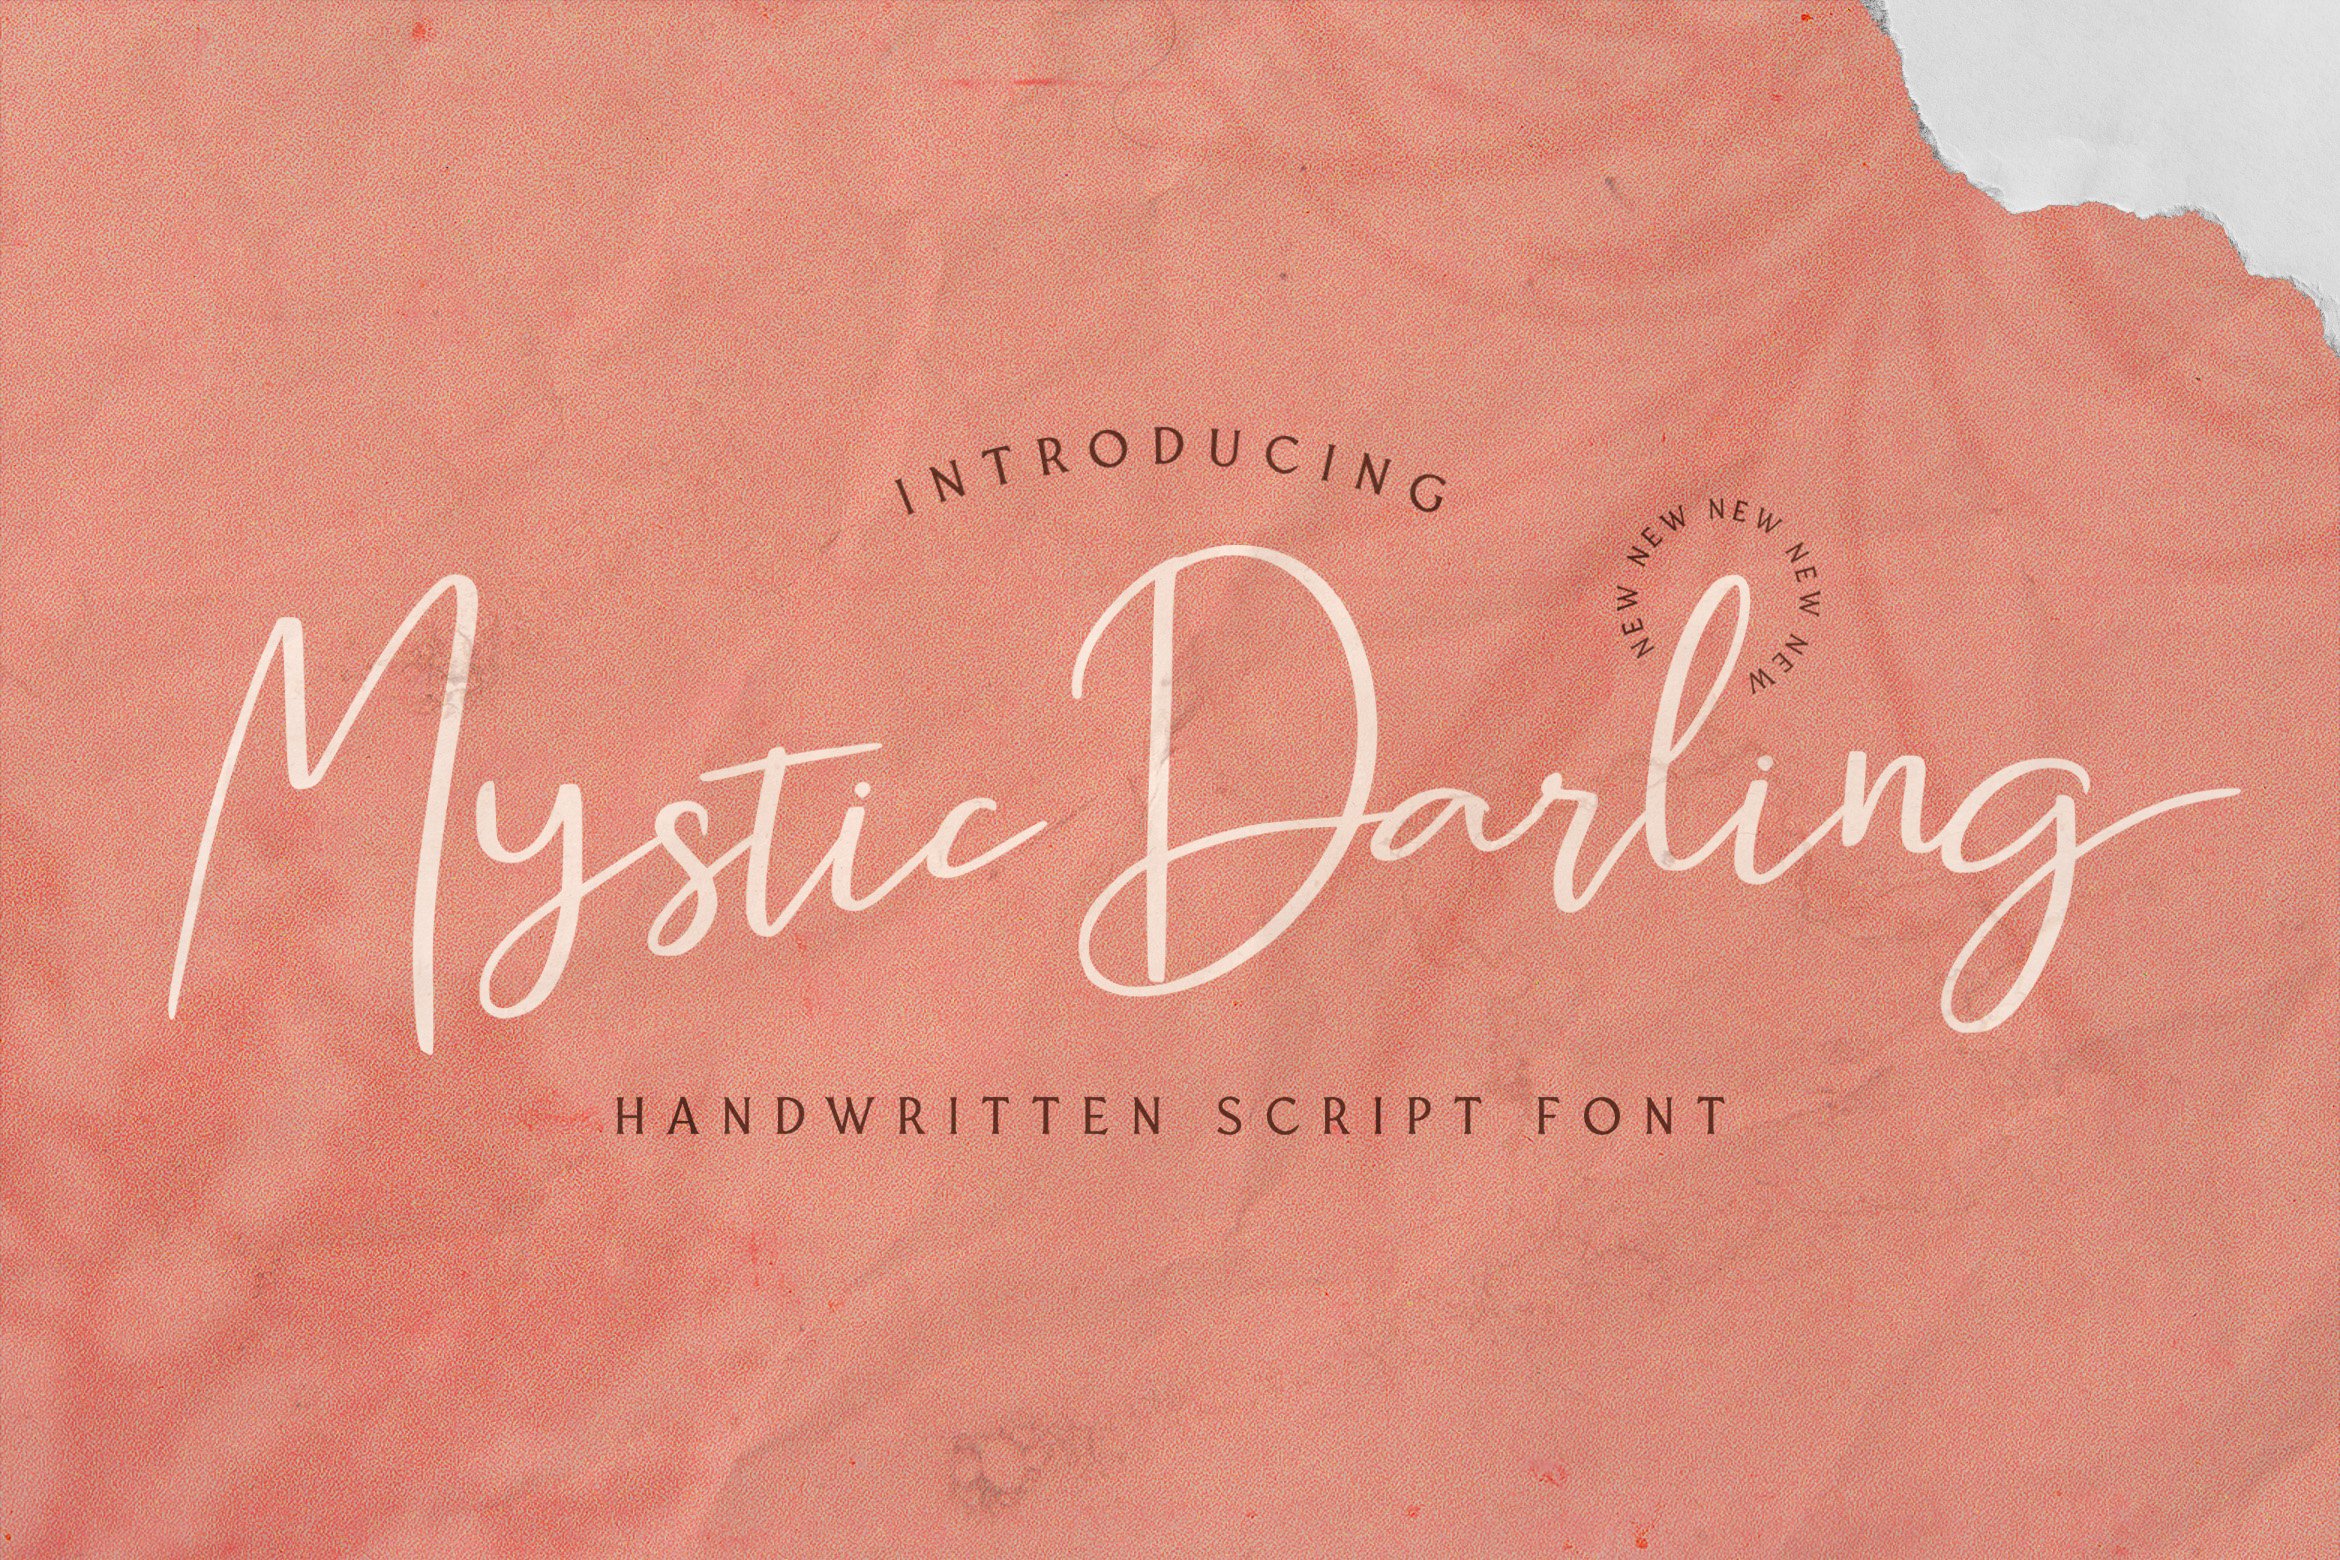 Mystic Darling - Handwritten Font cover image.